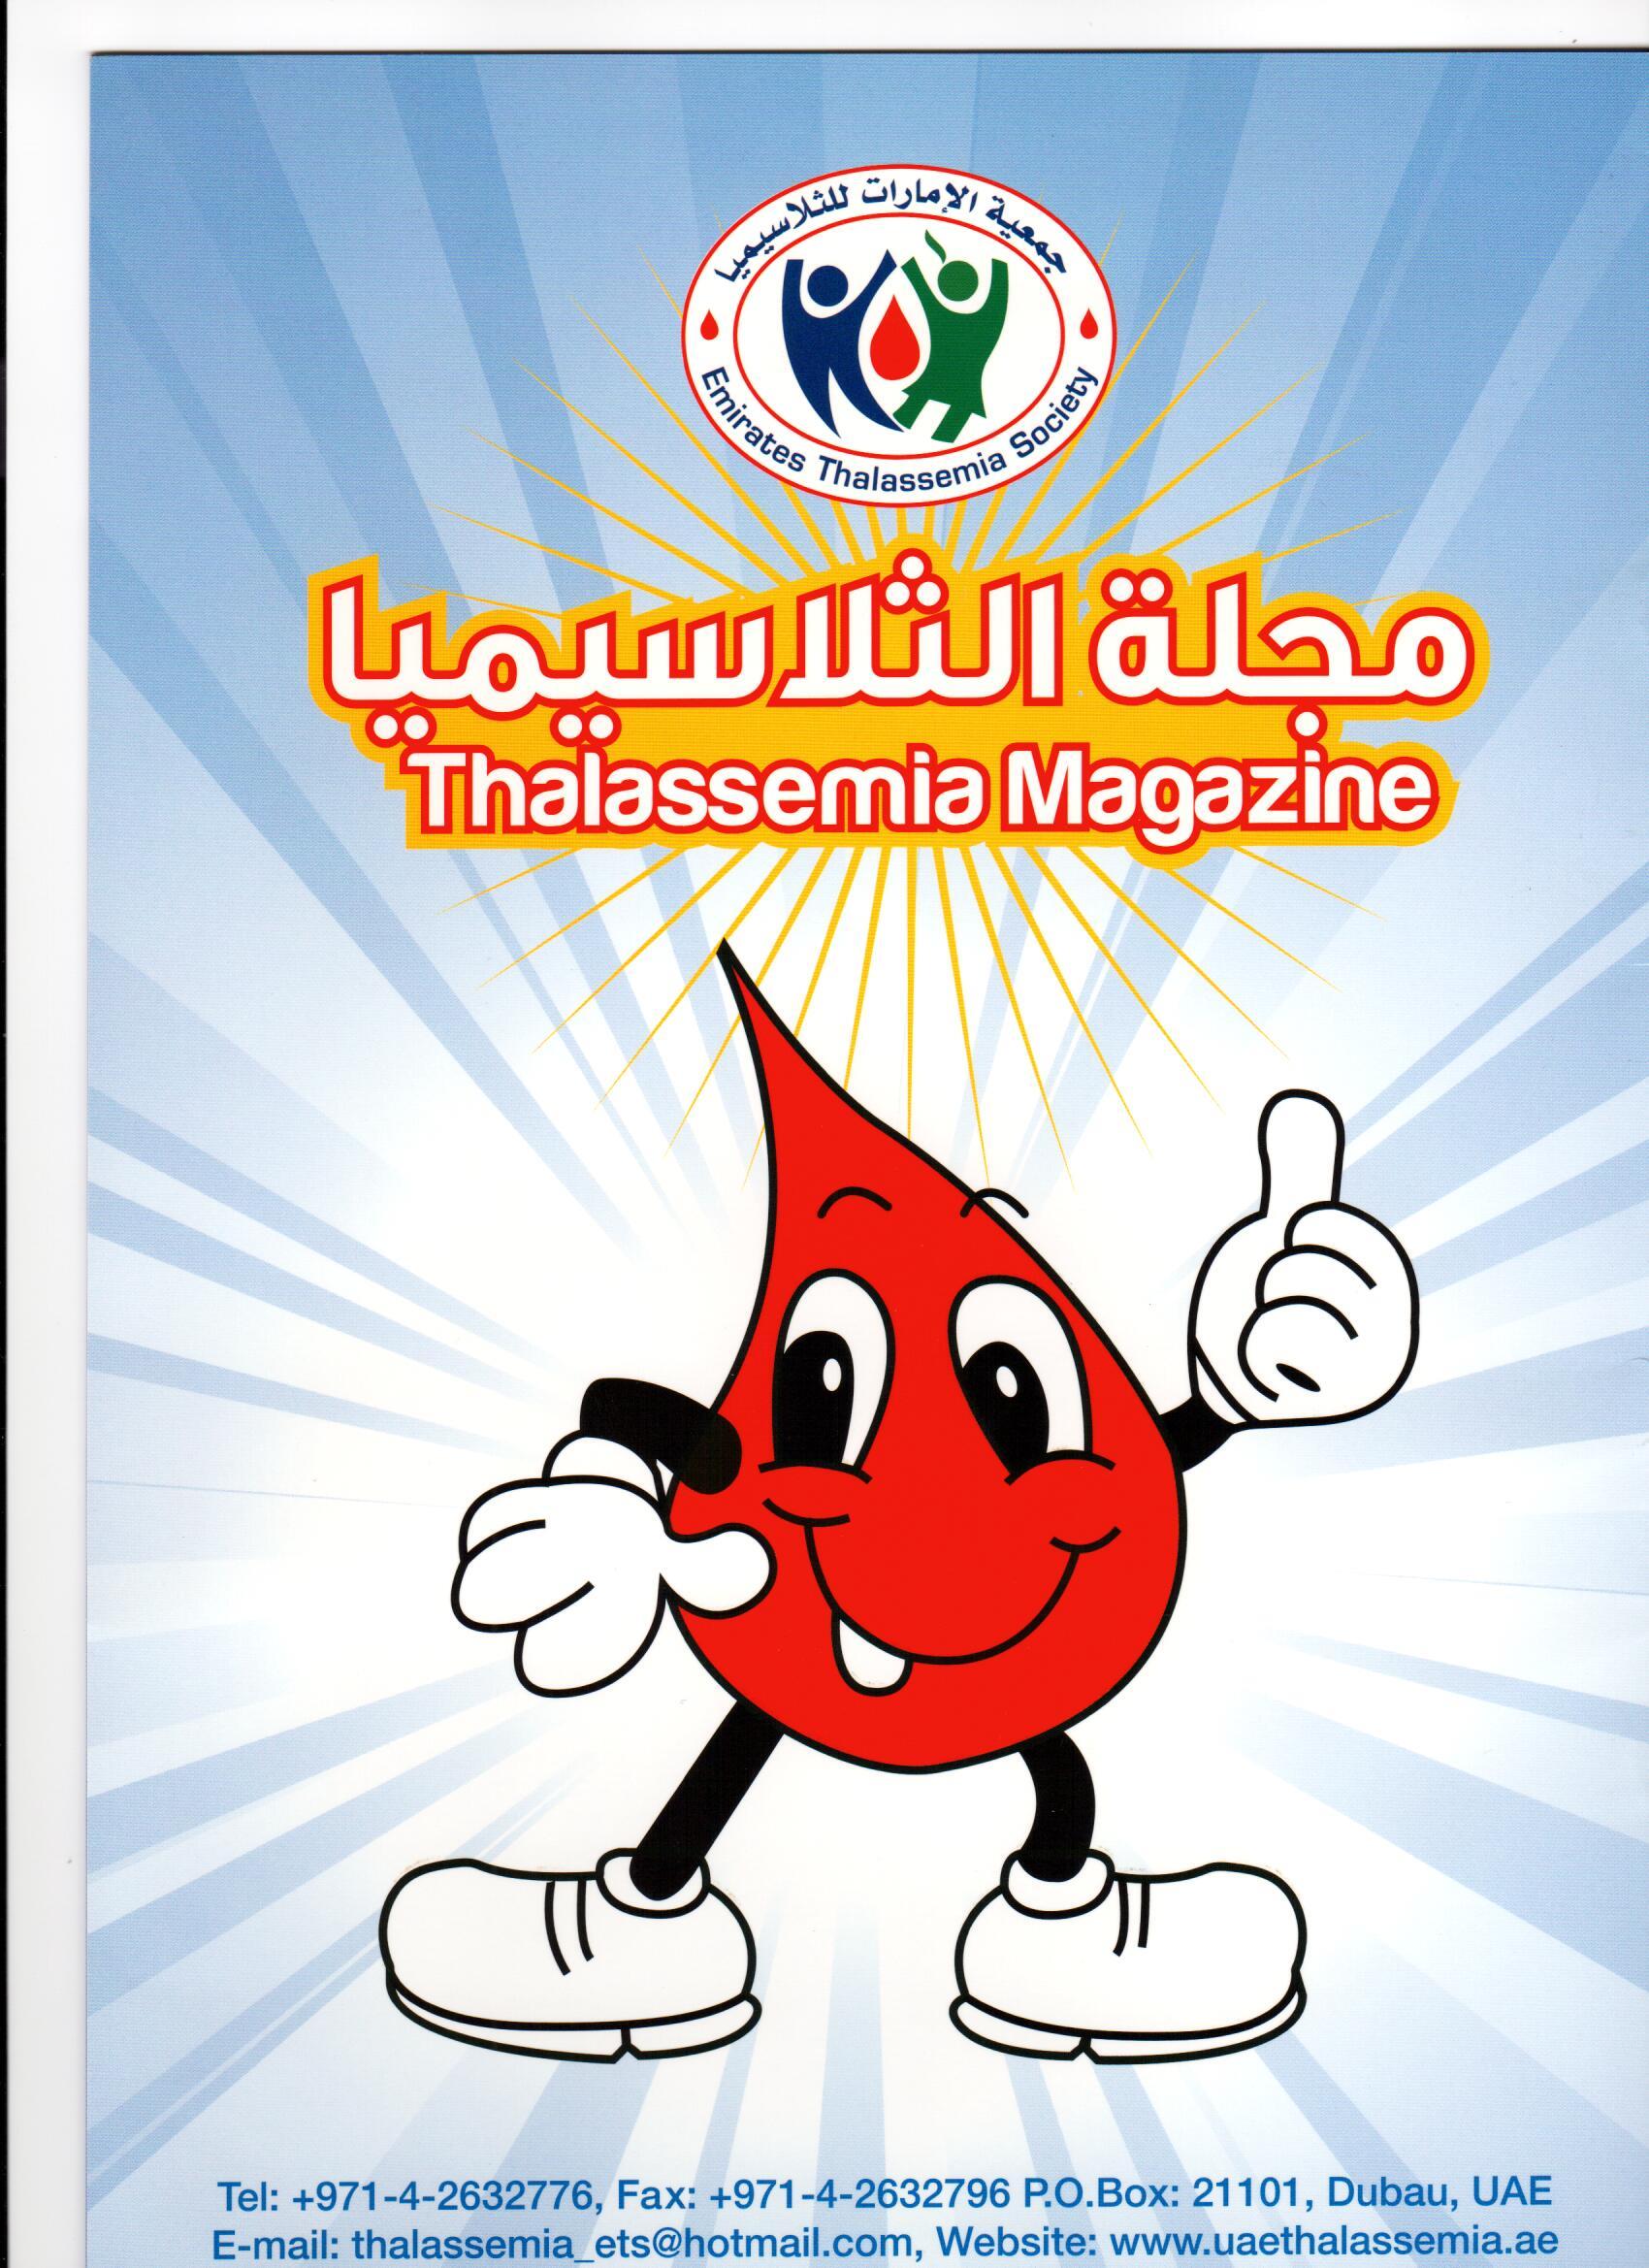 Thalassemia magazine